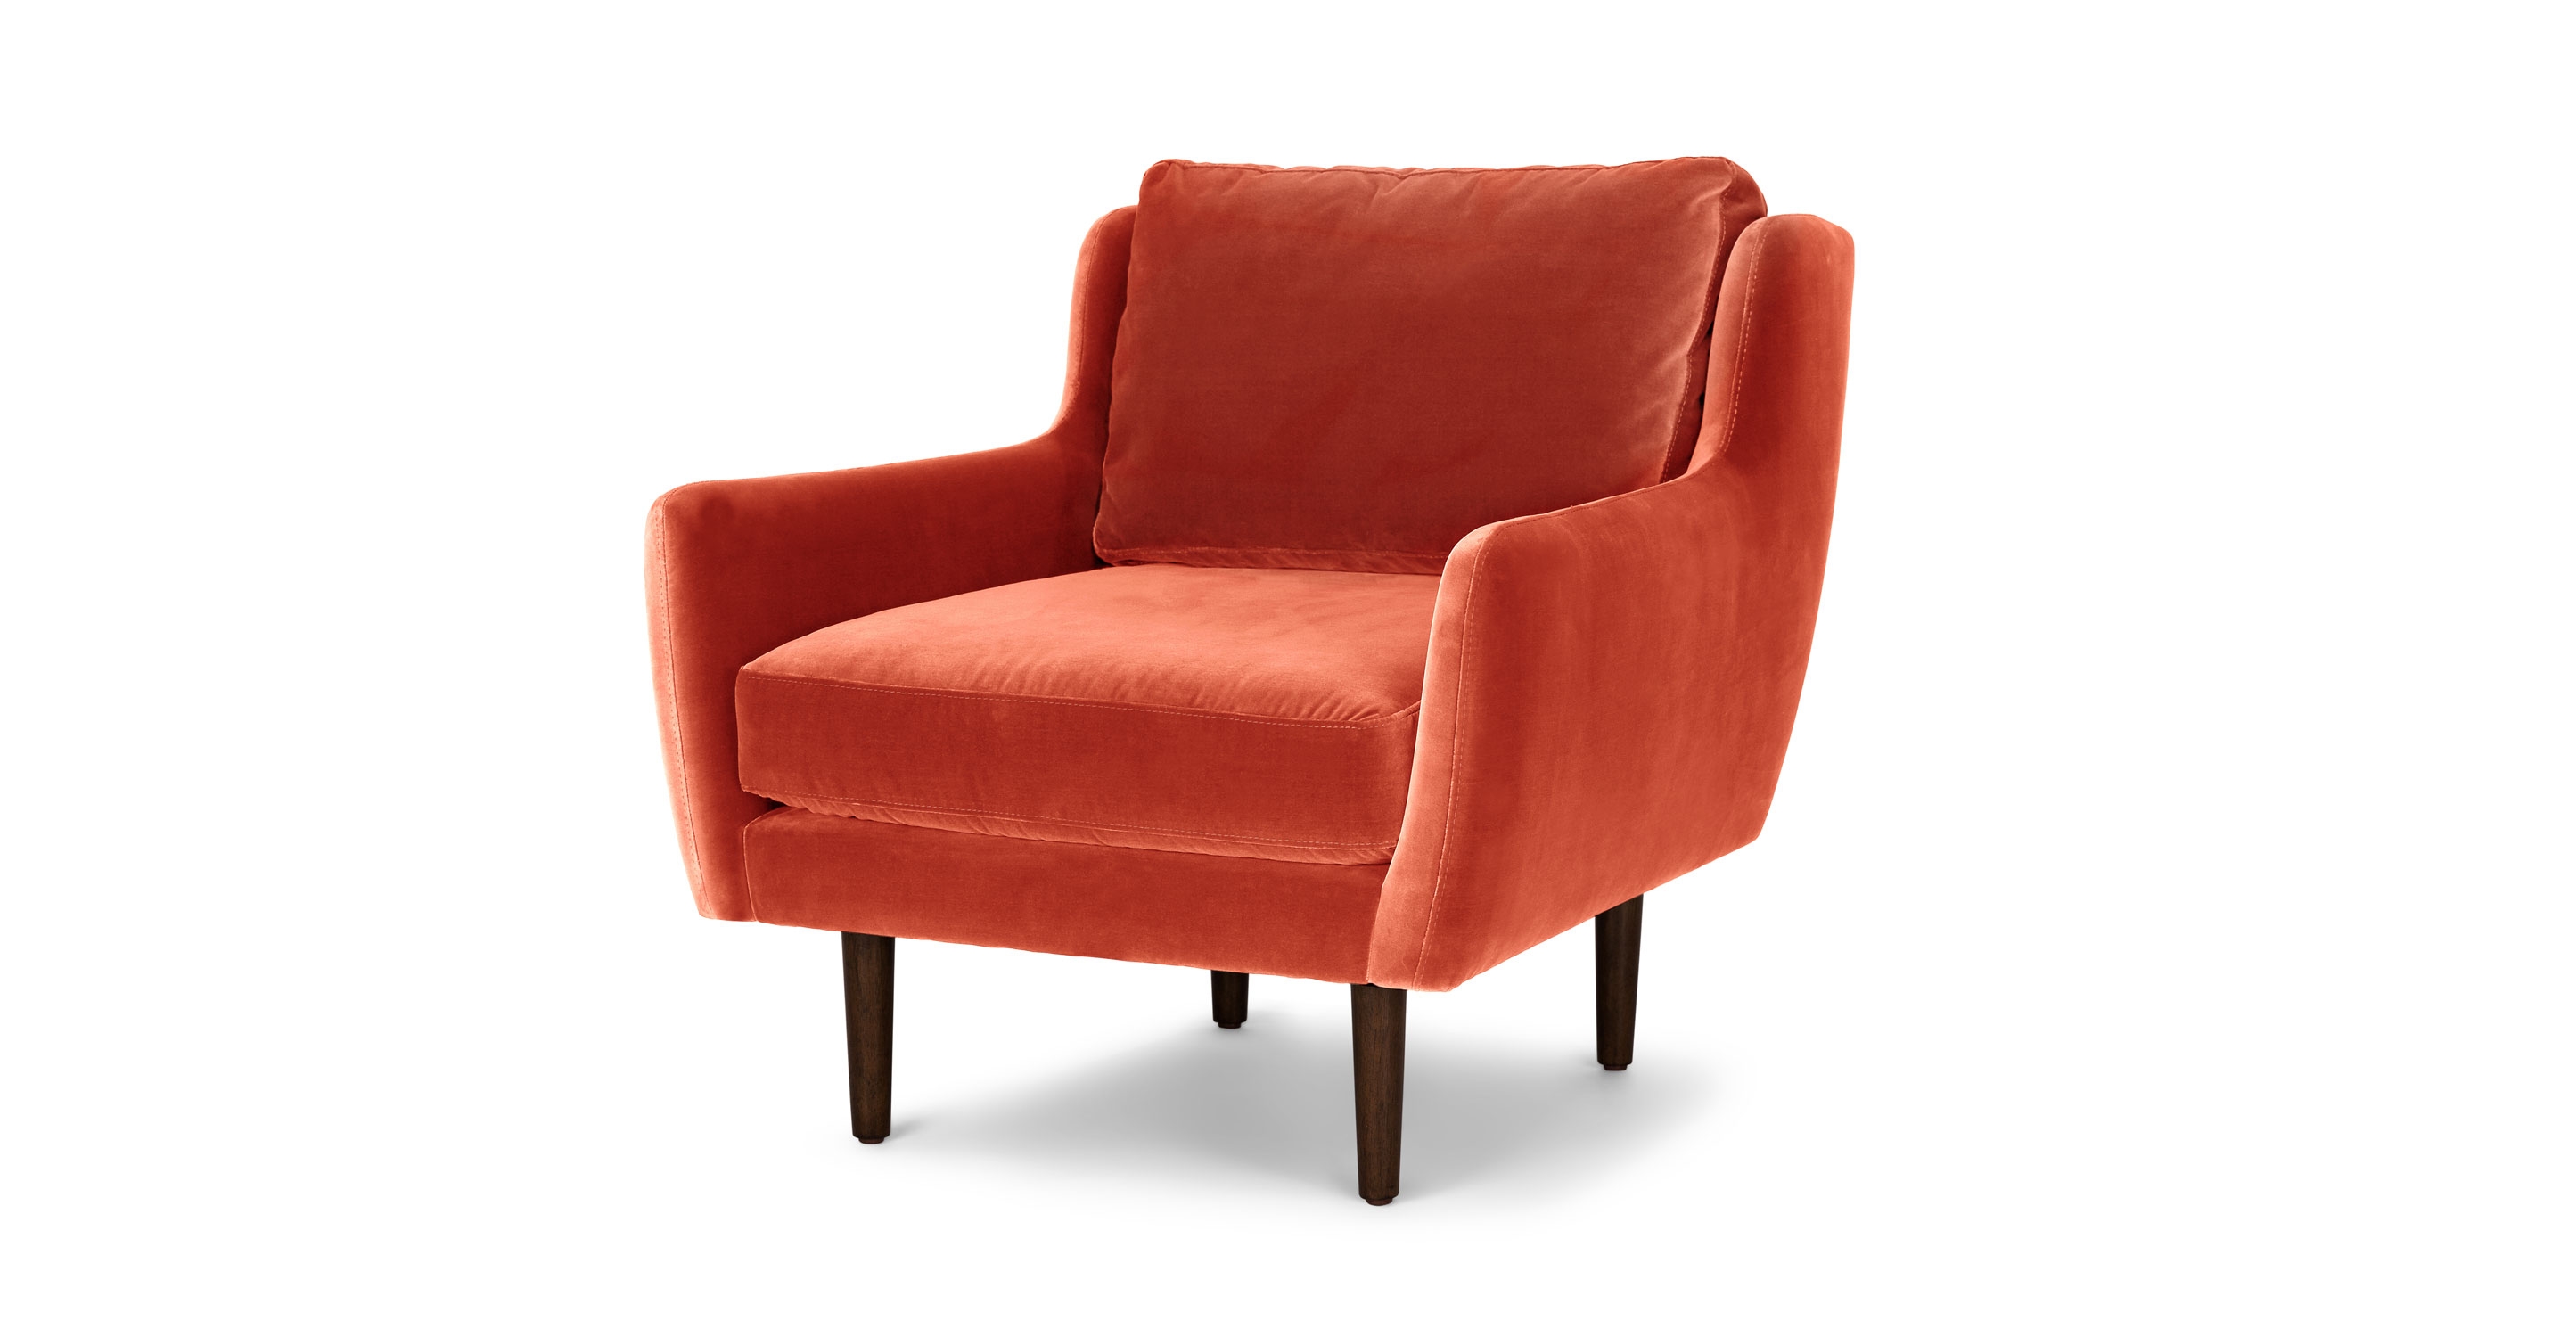 Matrix Persimmon Orange Chair - Image 1